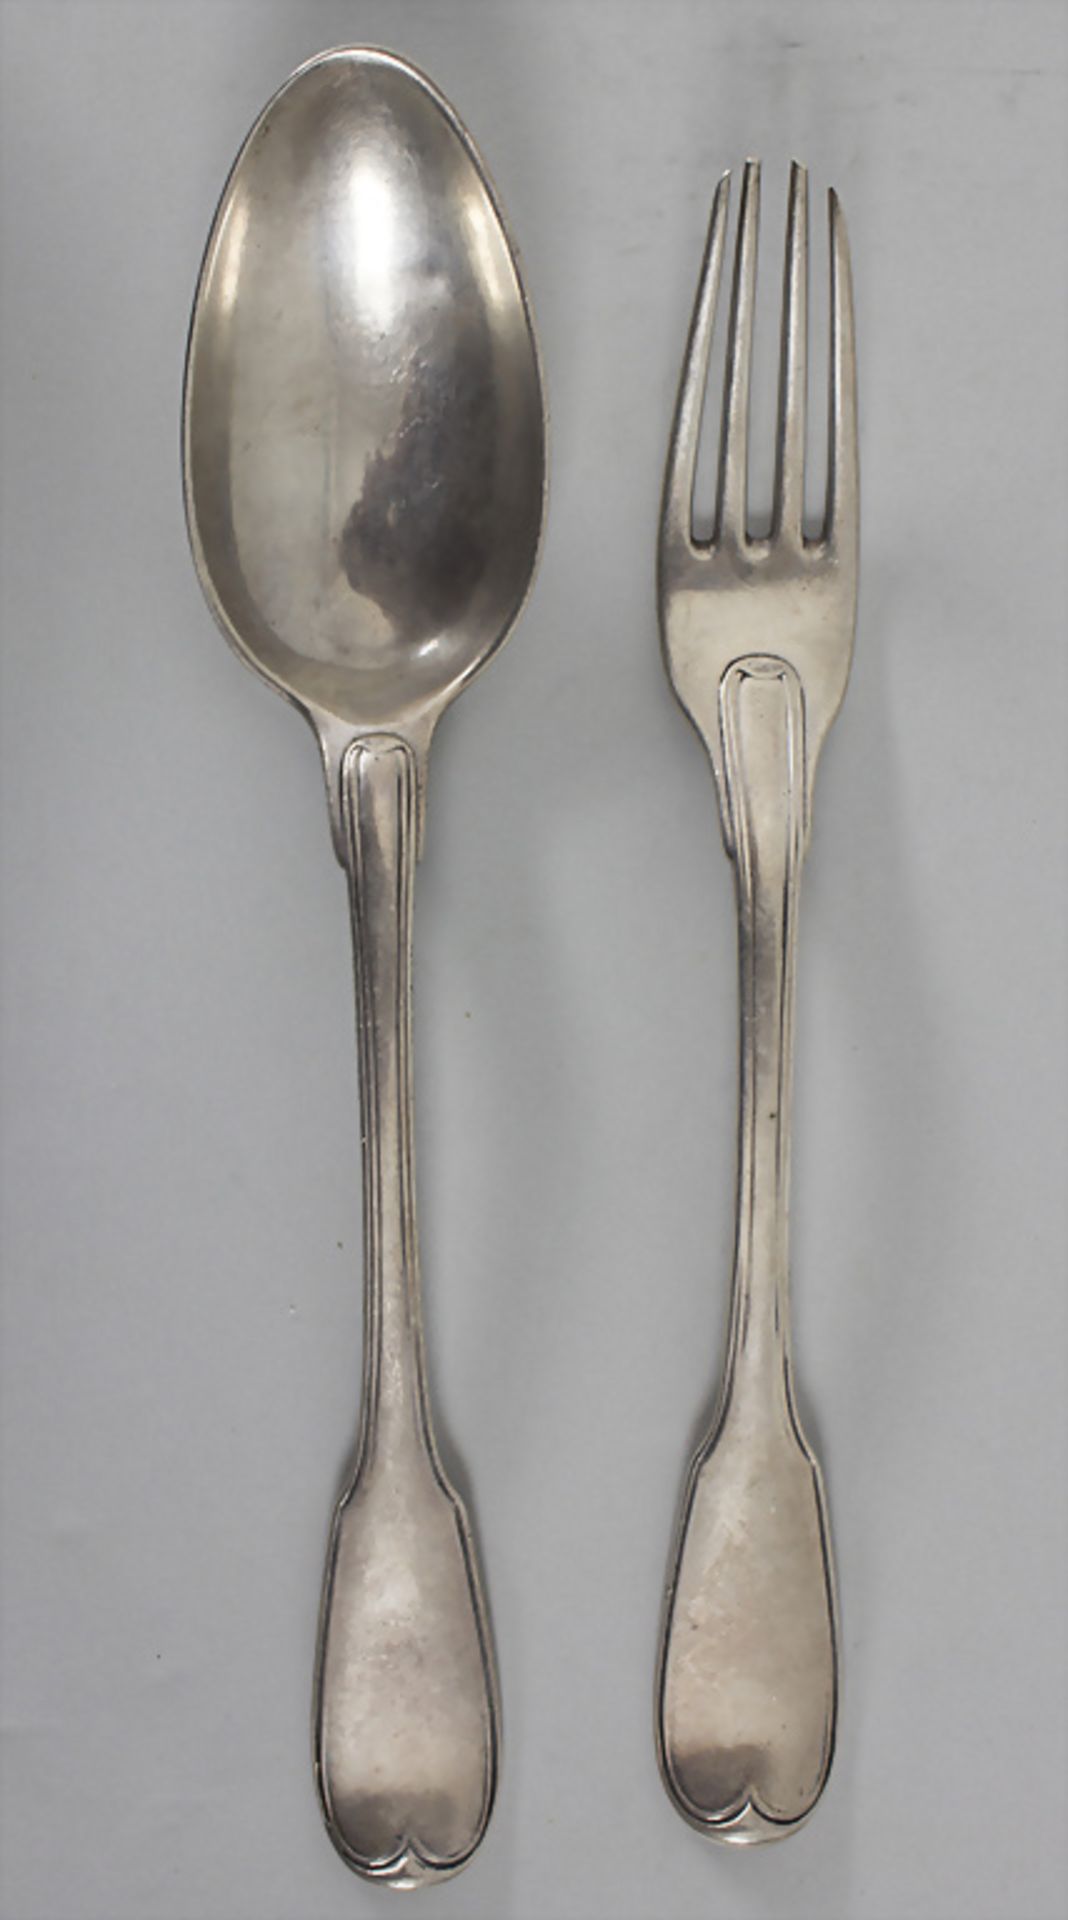 25 tlg. Silberbesteck / 25 pieces of silver cutlery, Imlin, Straßburg / Strasbourg, 1778 - Image 2 of 6